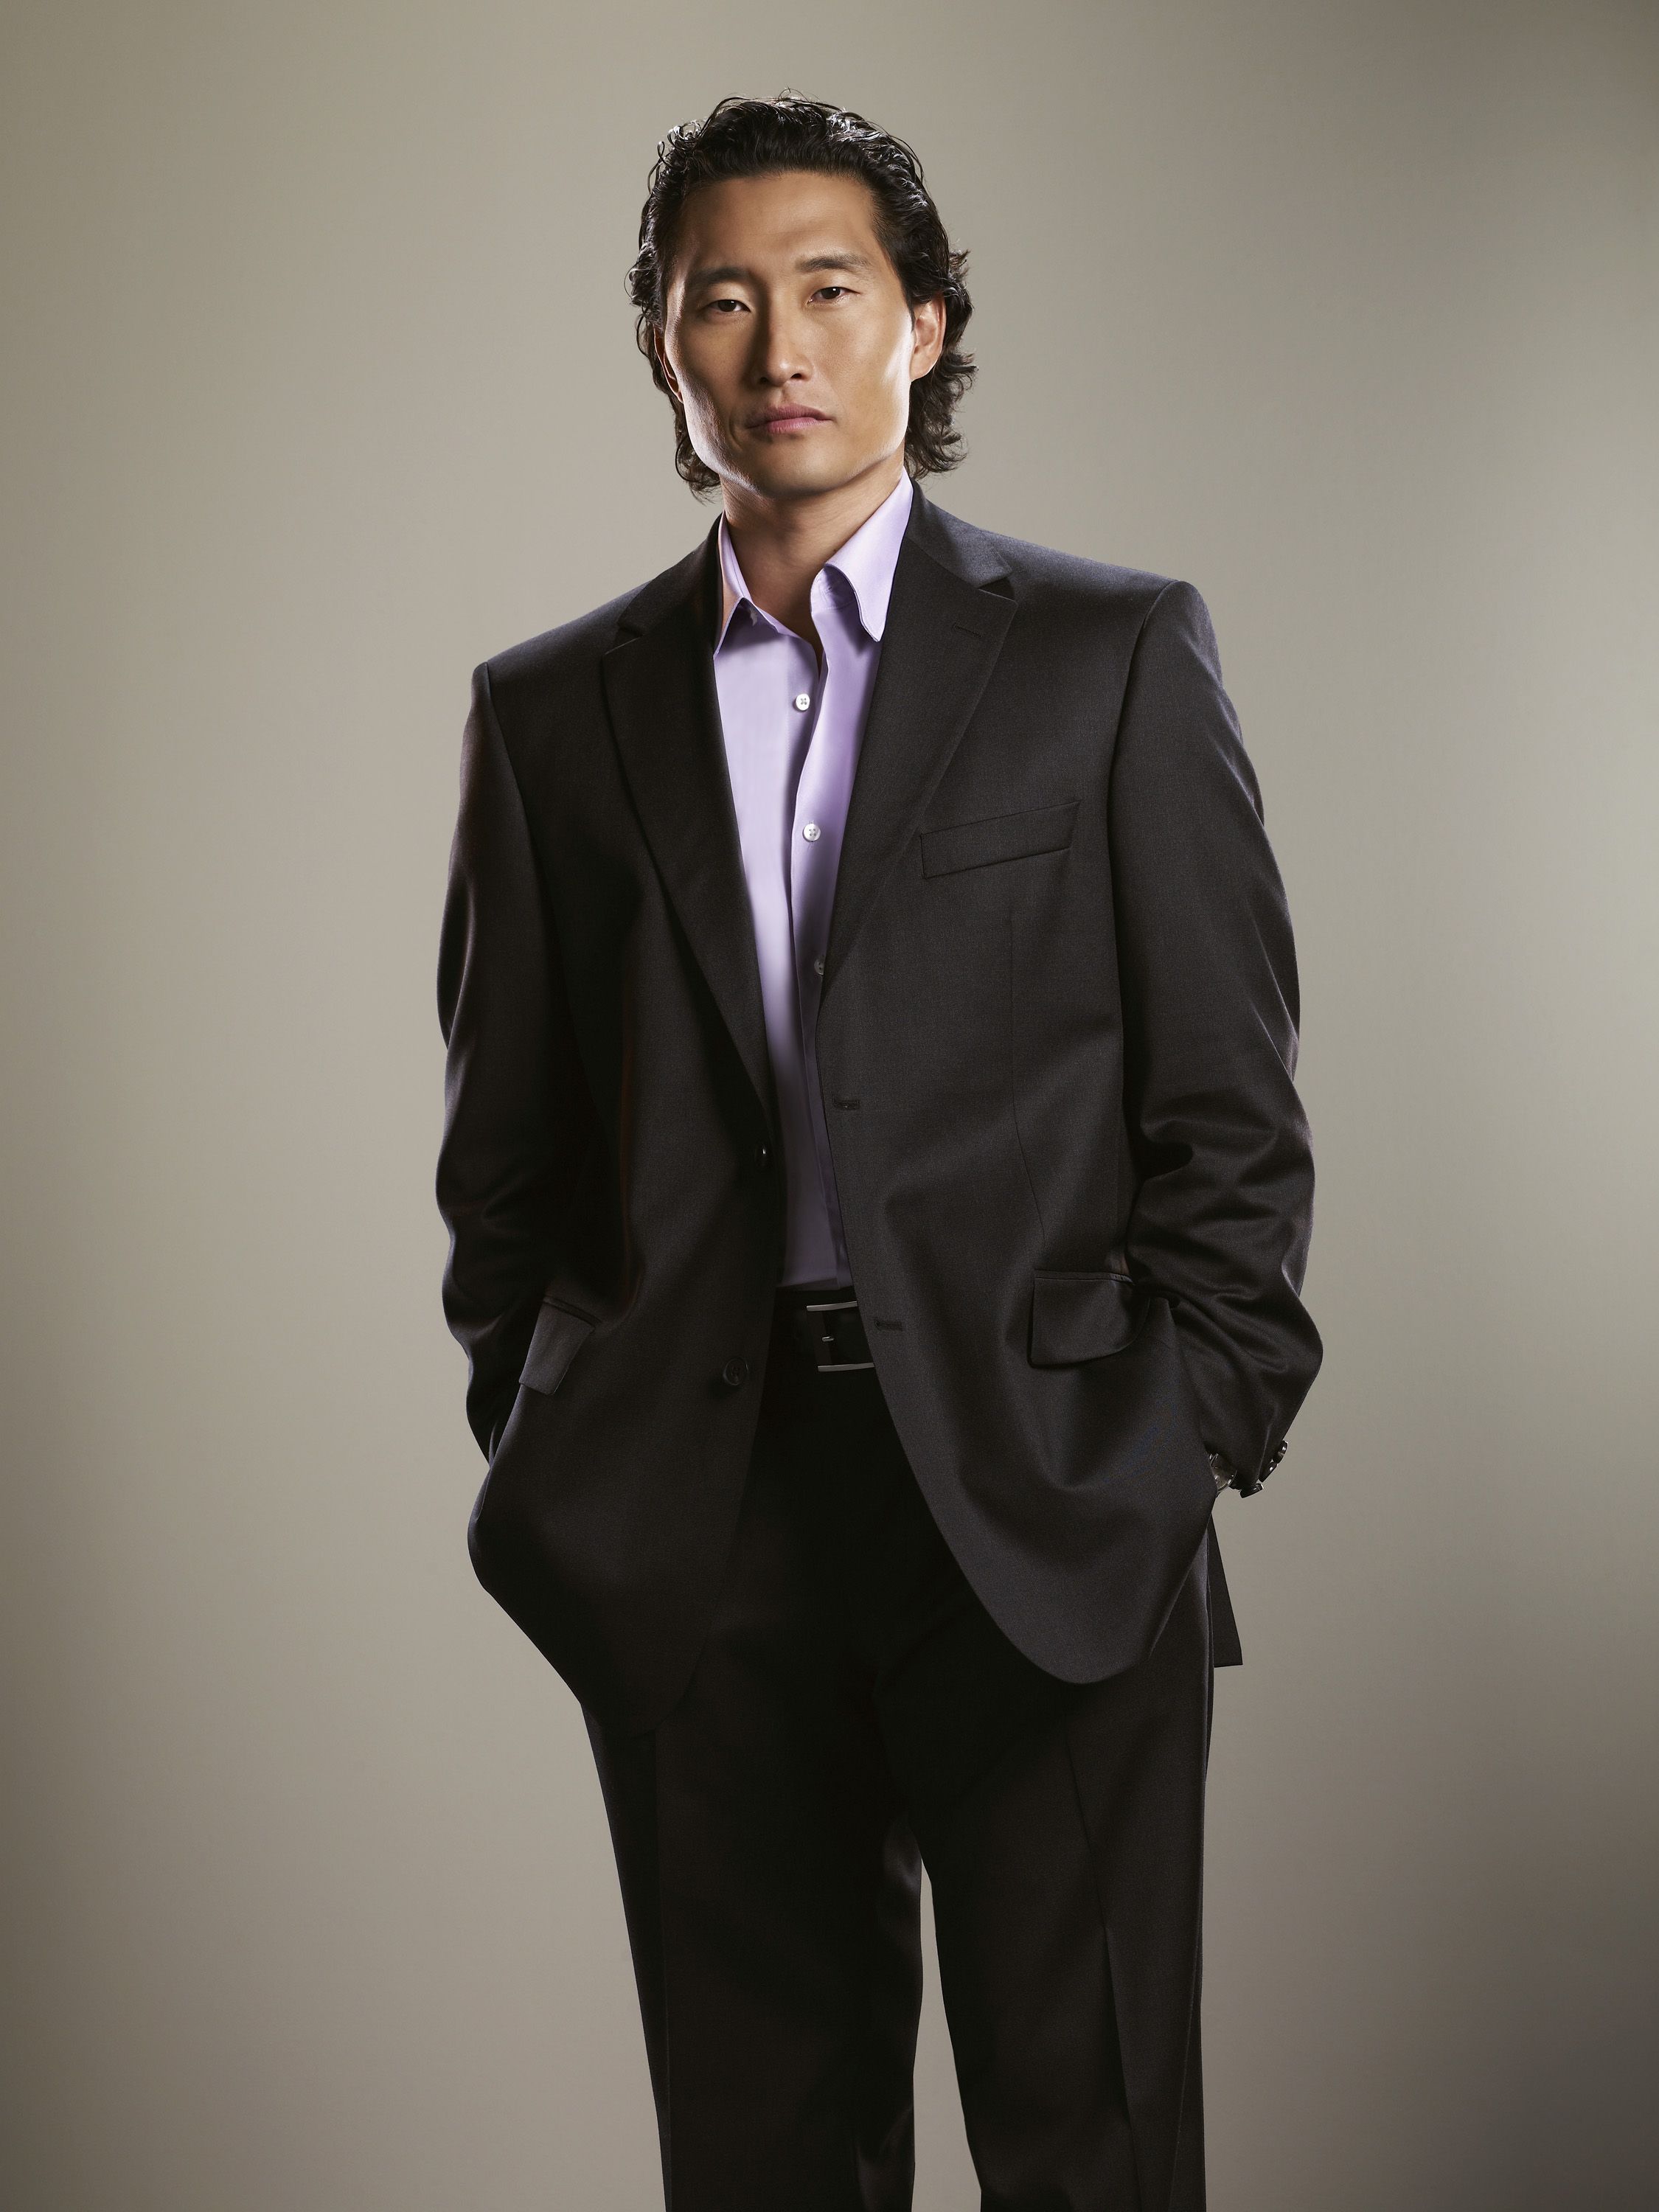 Lost S5 Daniel Dae Kim As Jin Soo Kwon. Daniel, Kim, Fantasy Tv Shows